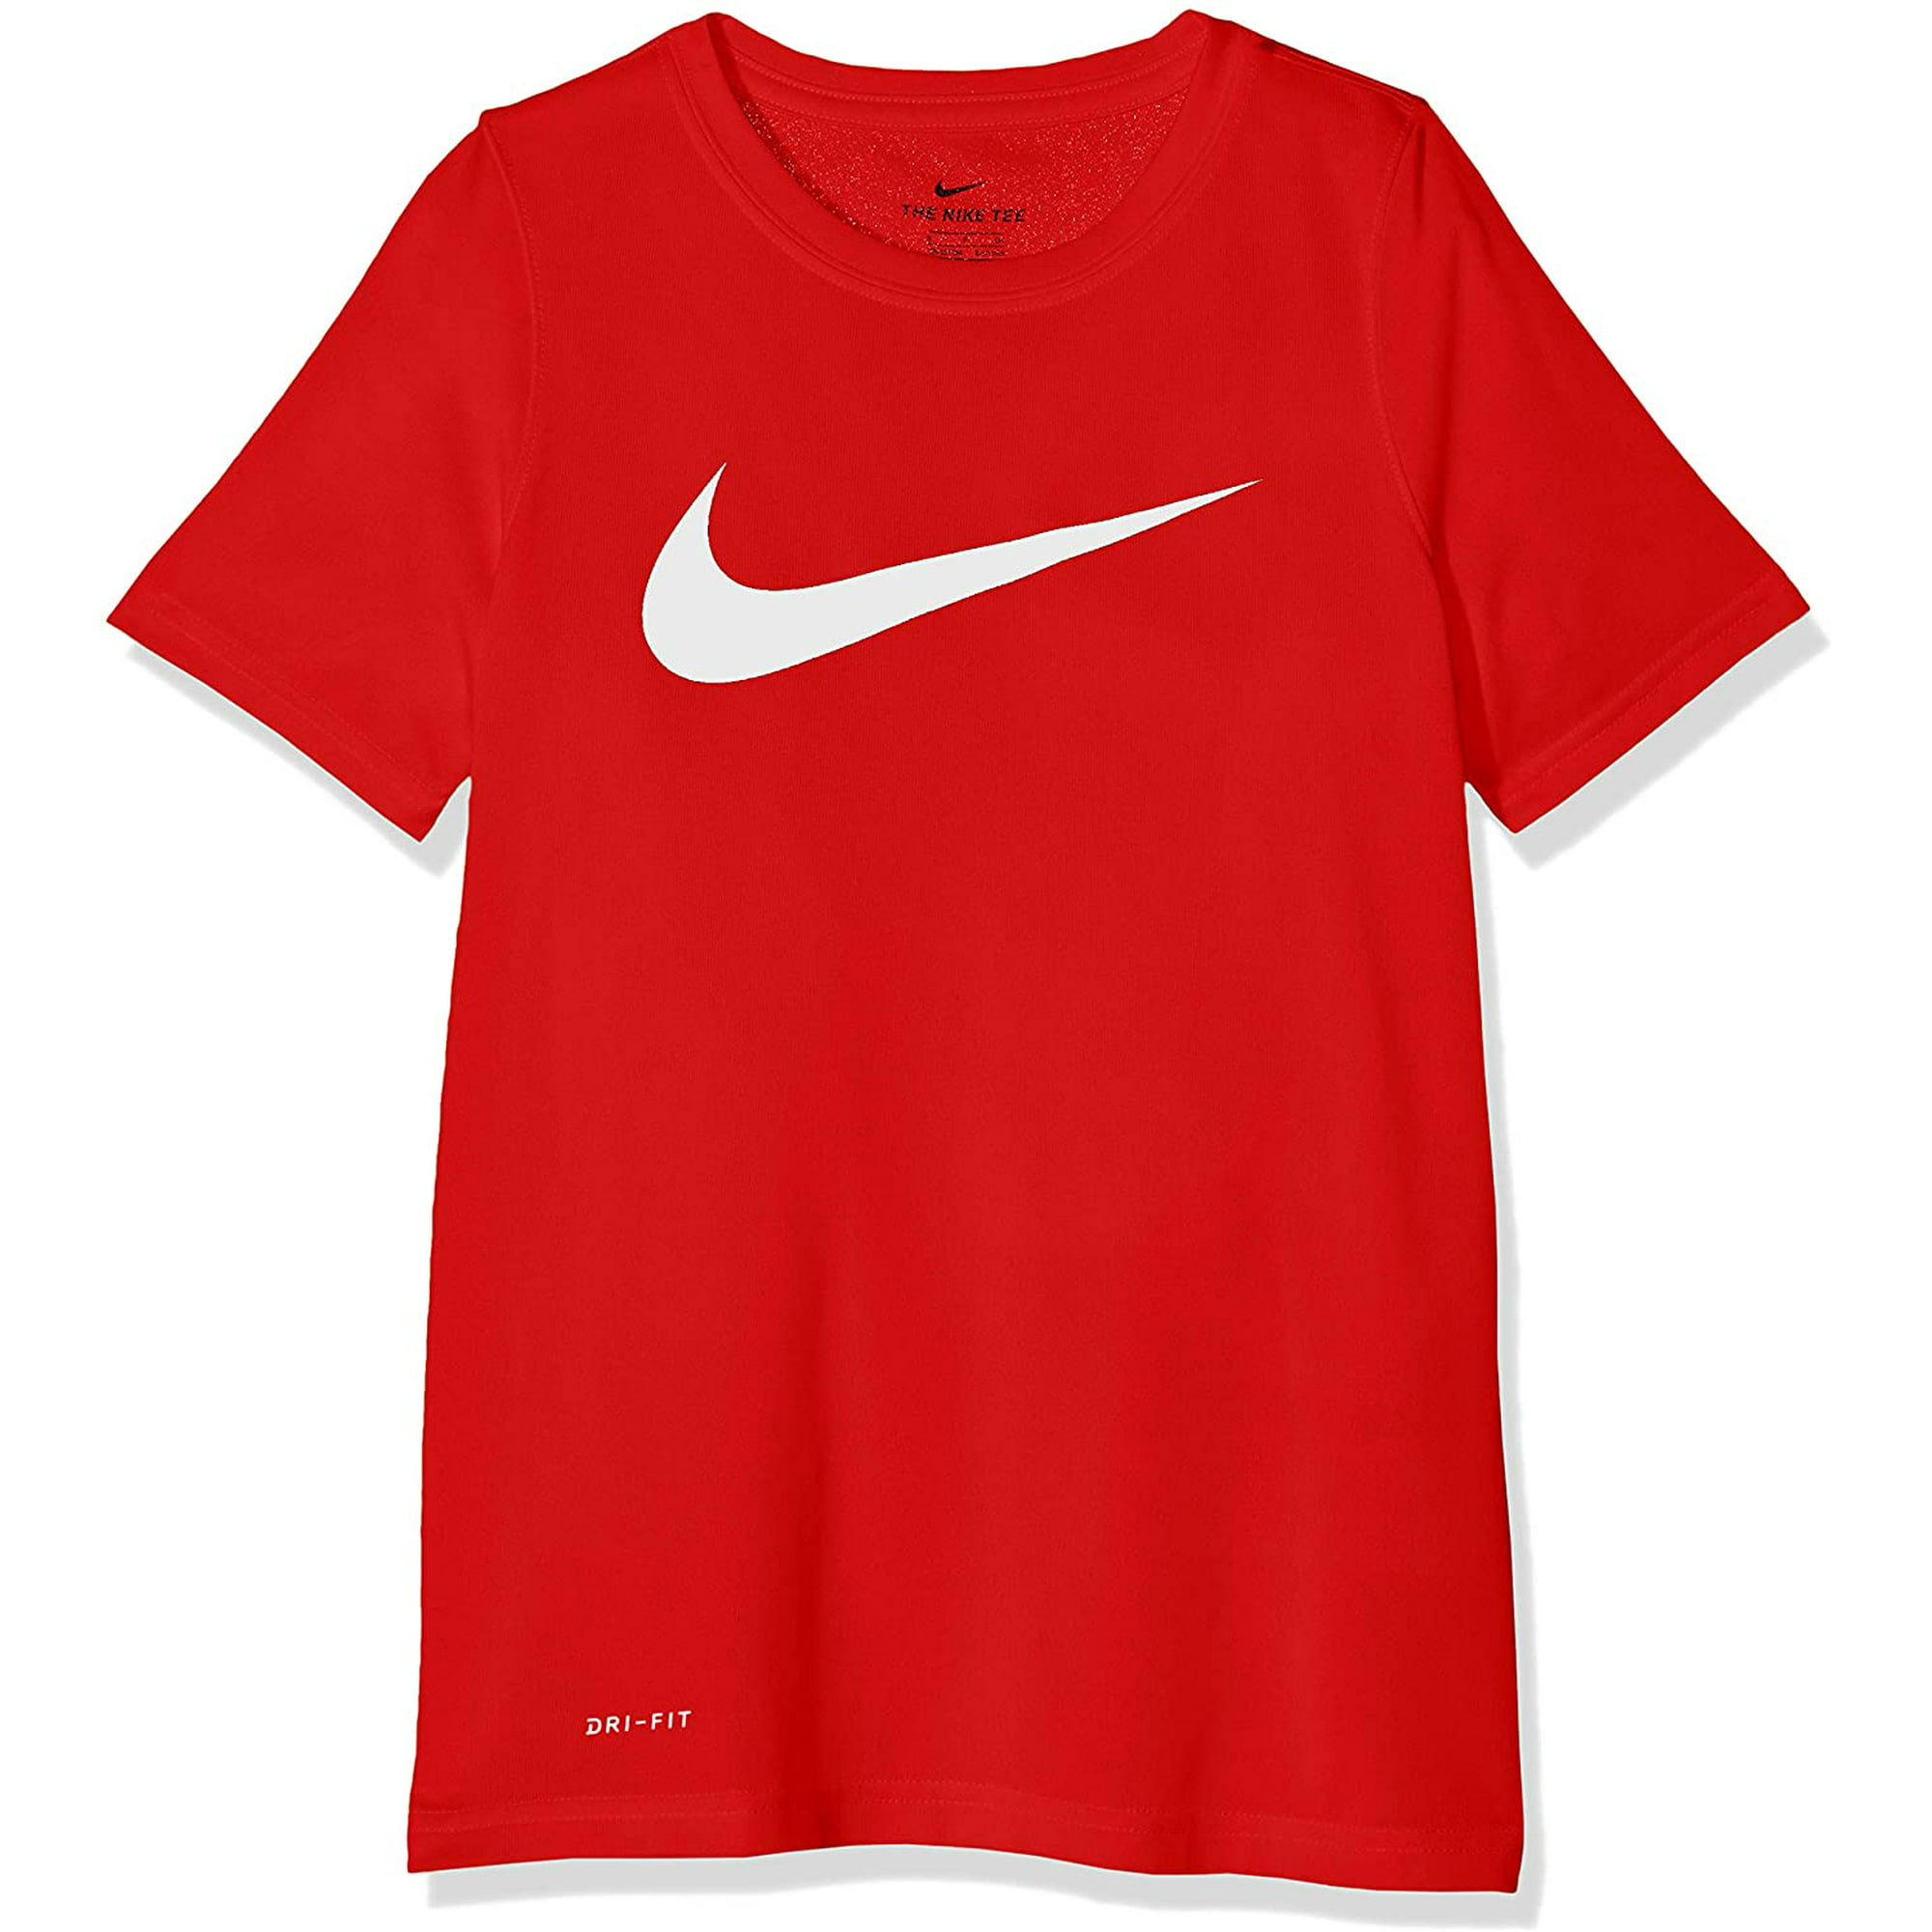 Nike Boys Dri Fit T Shirt Large Red/White - Walmart.com